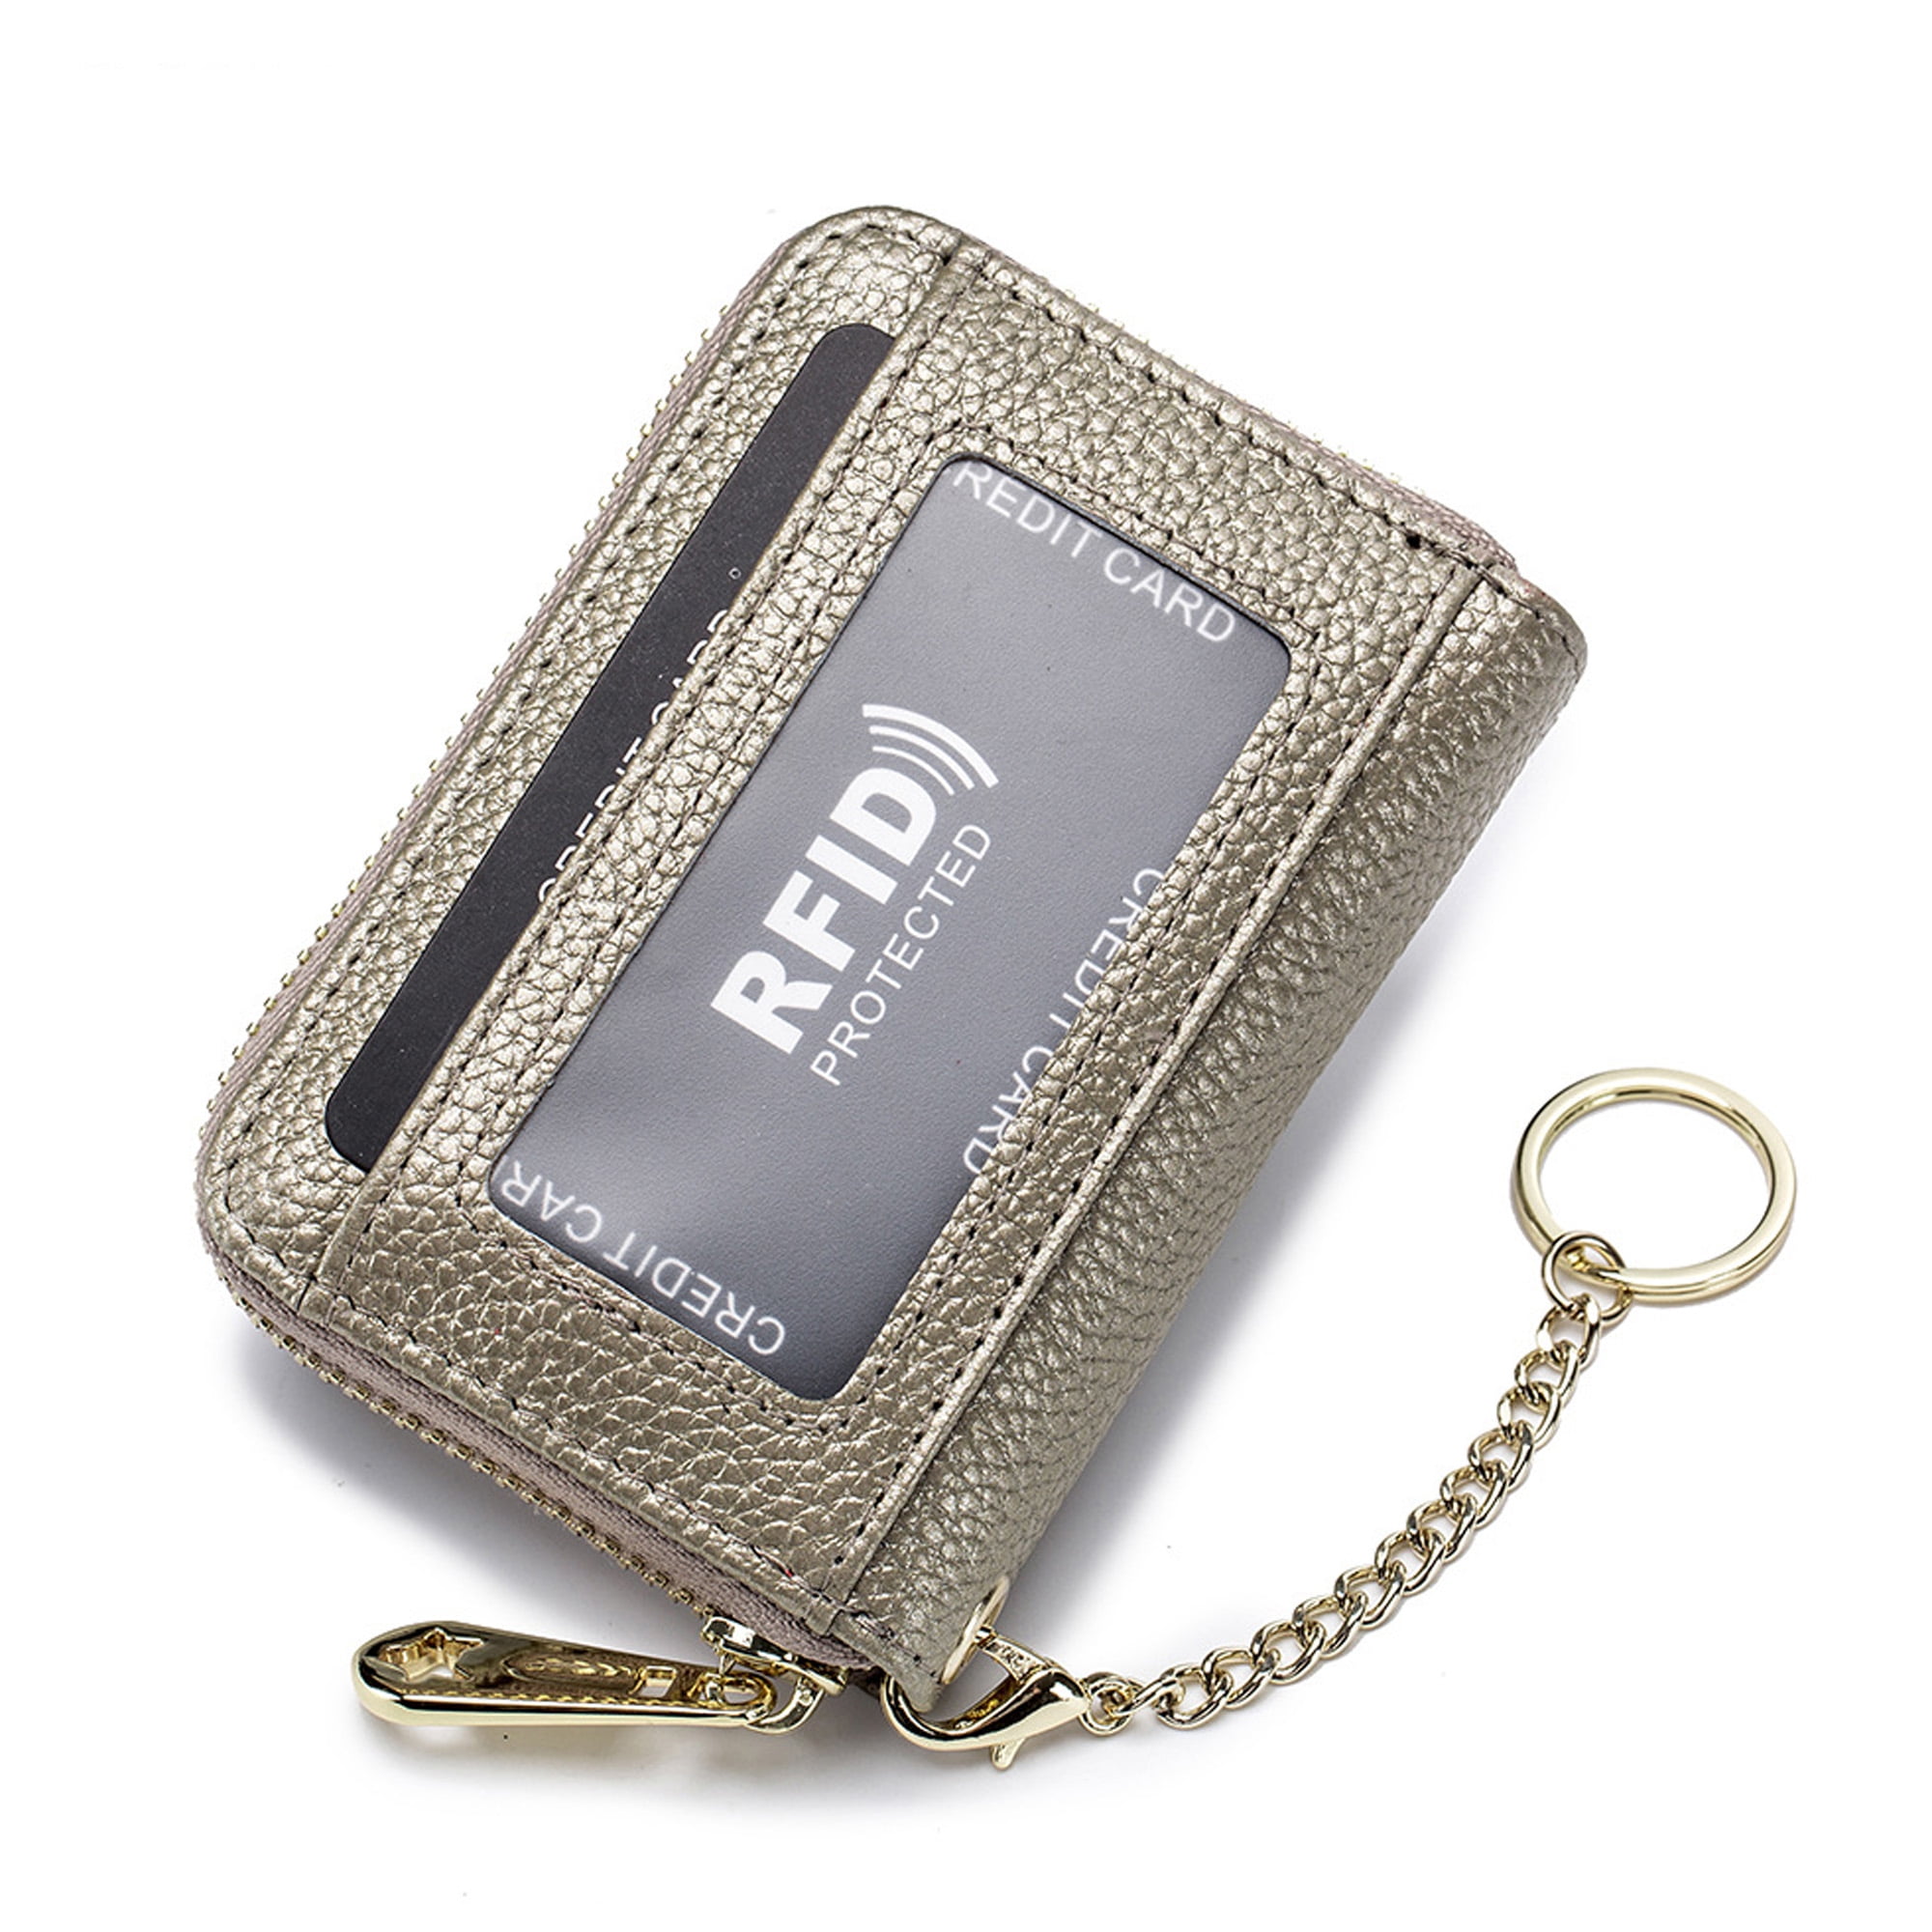 FurArt Credit Card Wallet, Zipper Card Cases Holder for Men Women, RFID Blocking, Keychain Wallet, Compact Size